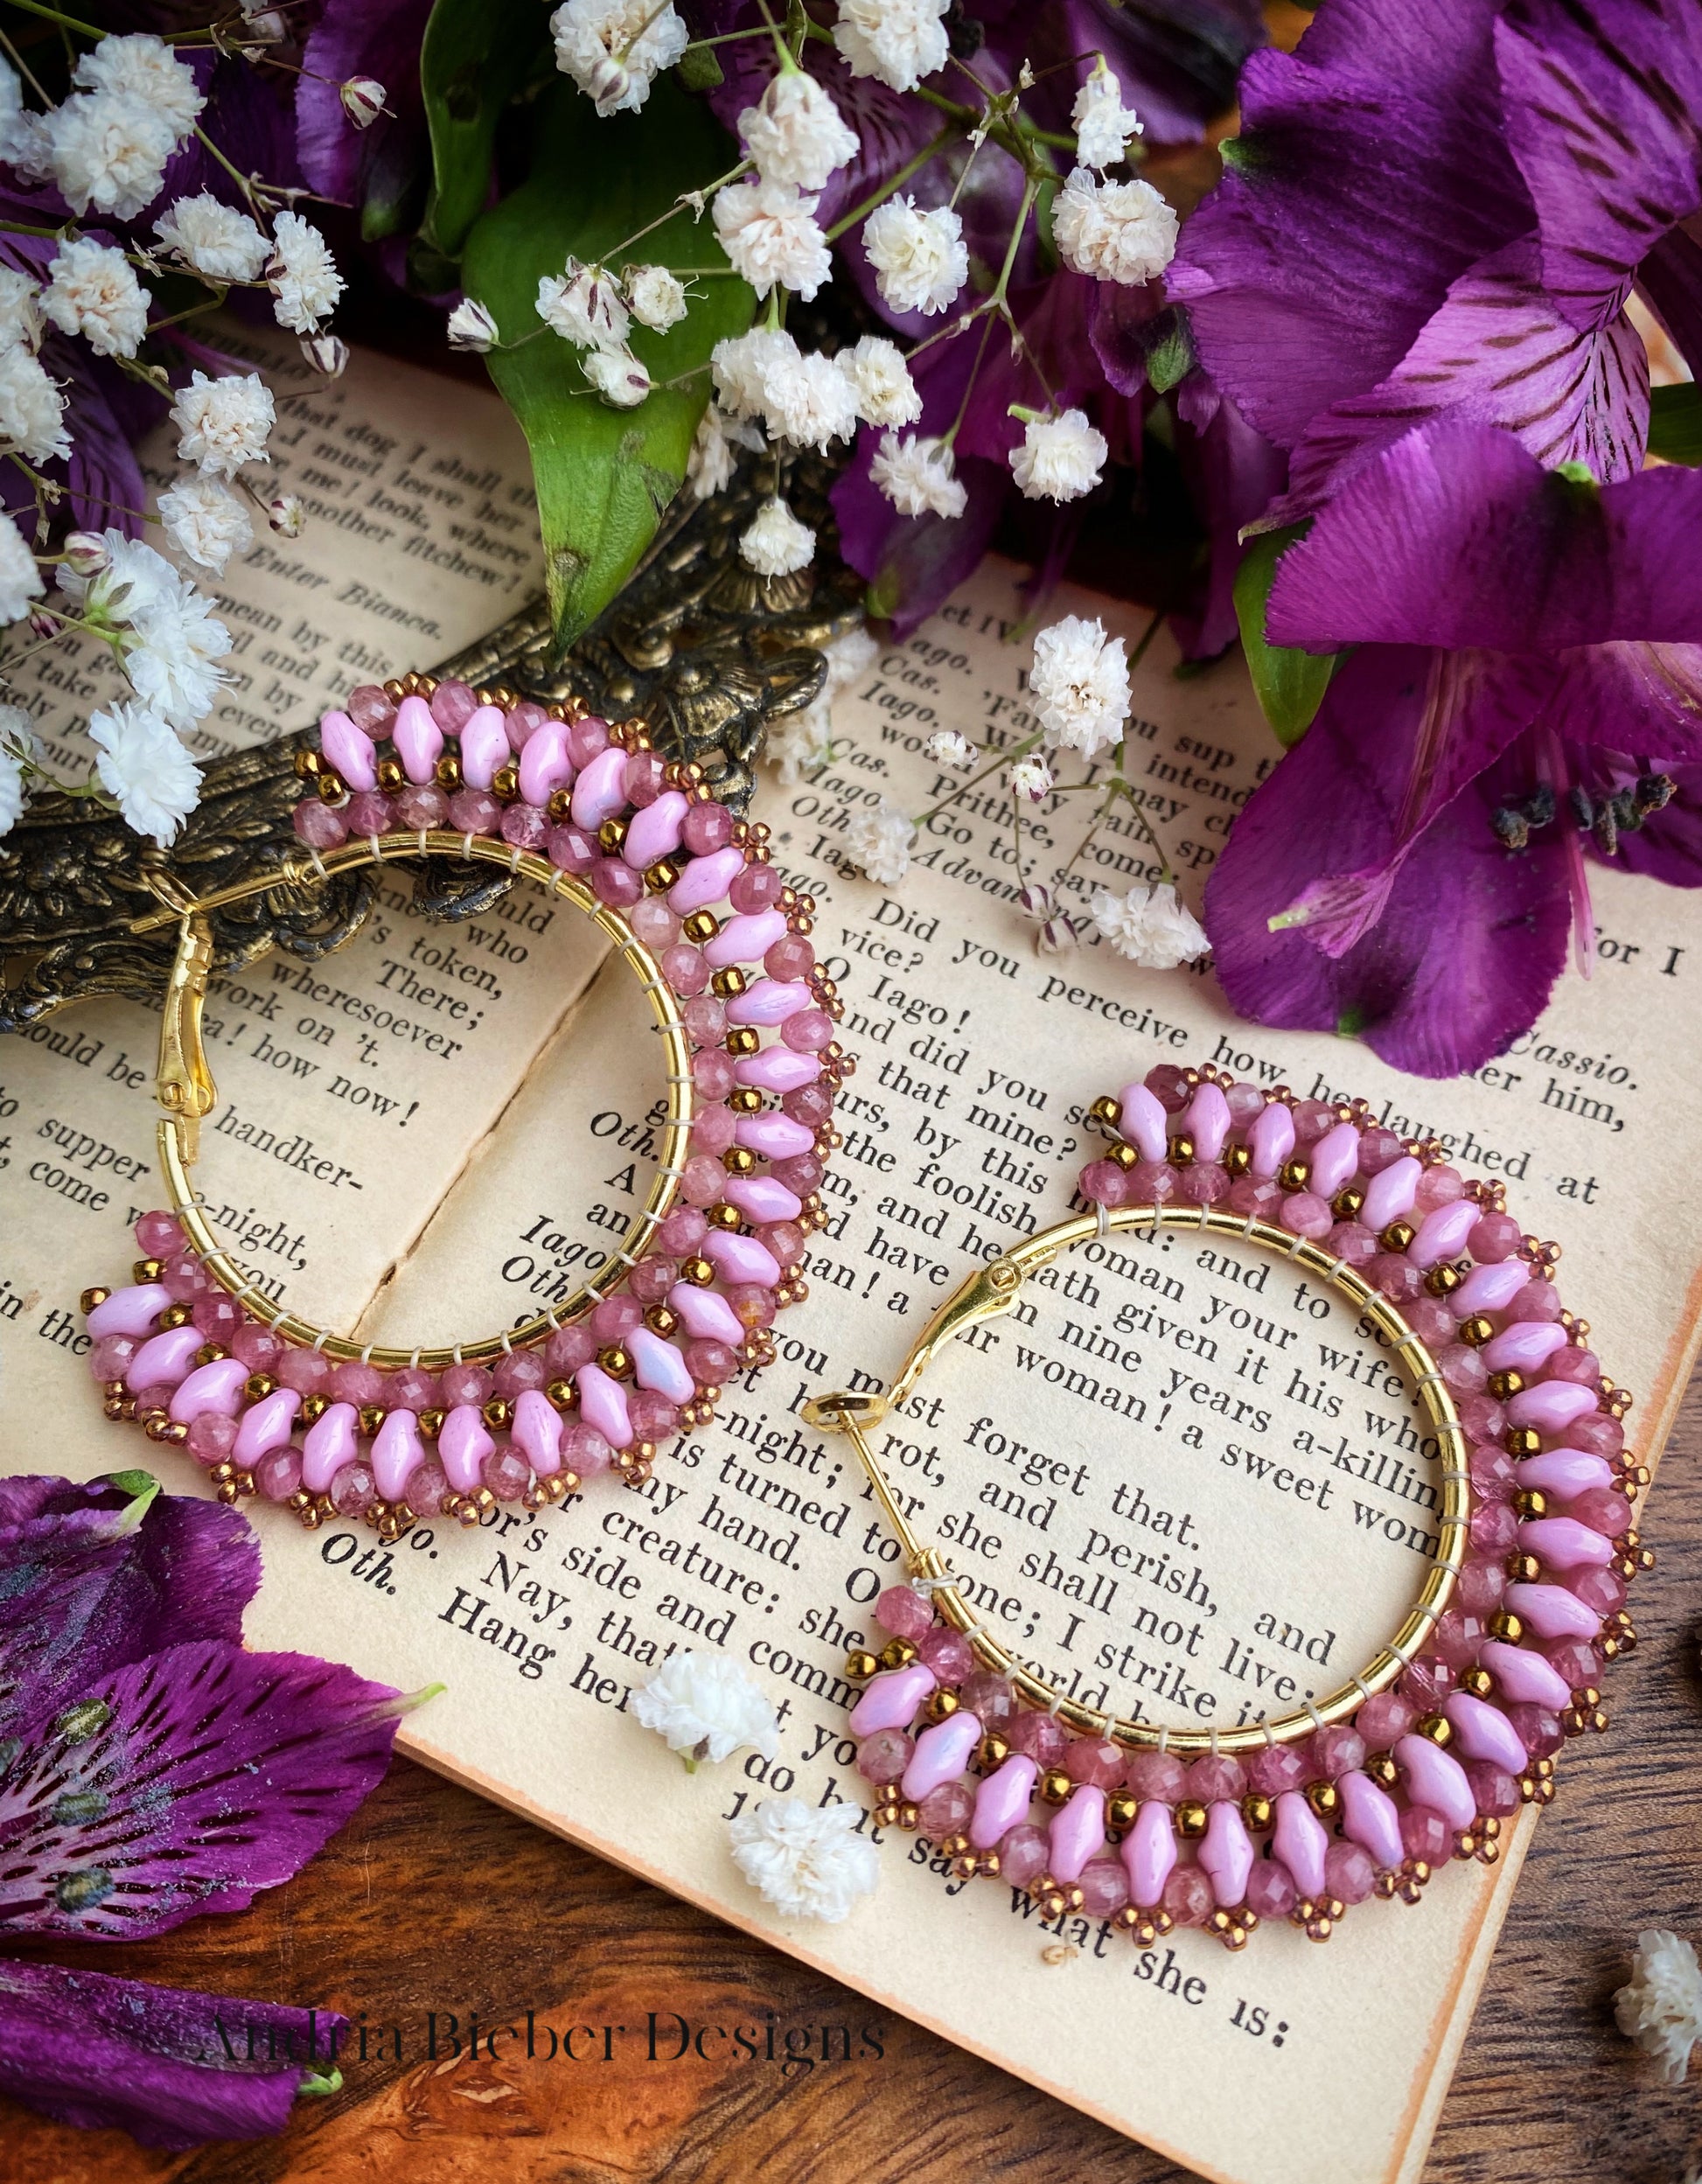 Pink dreams. Tourmaline stone. Miuki glass seed beads, hoop, weaved, earrings. - Andria Bieber Designs 